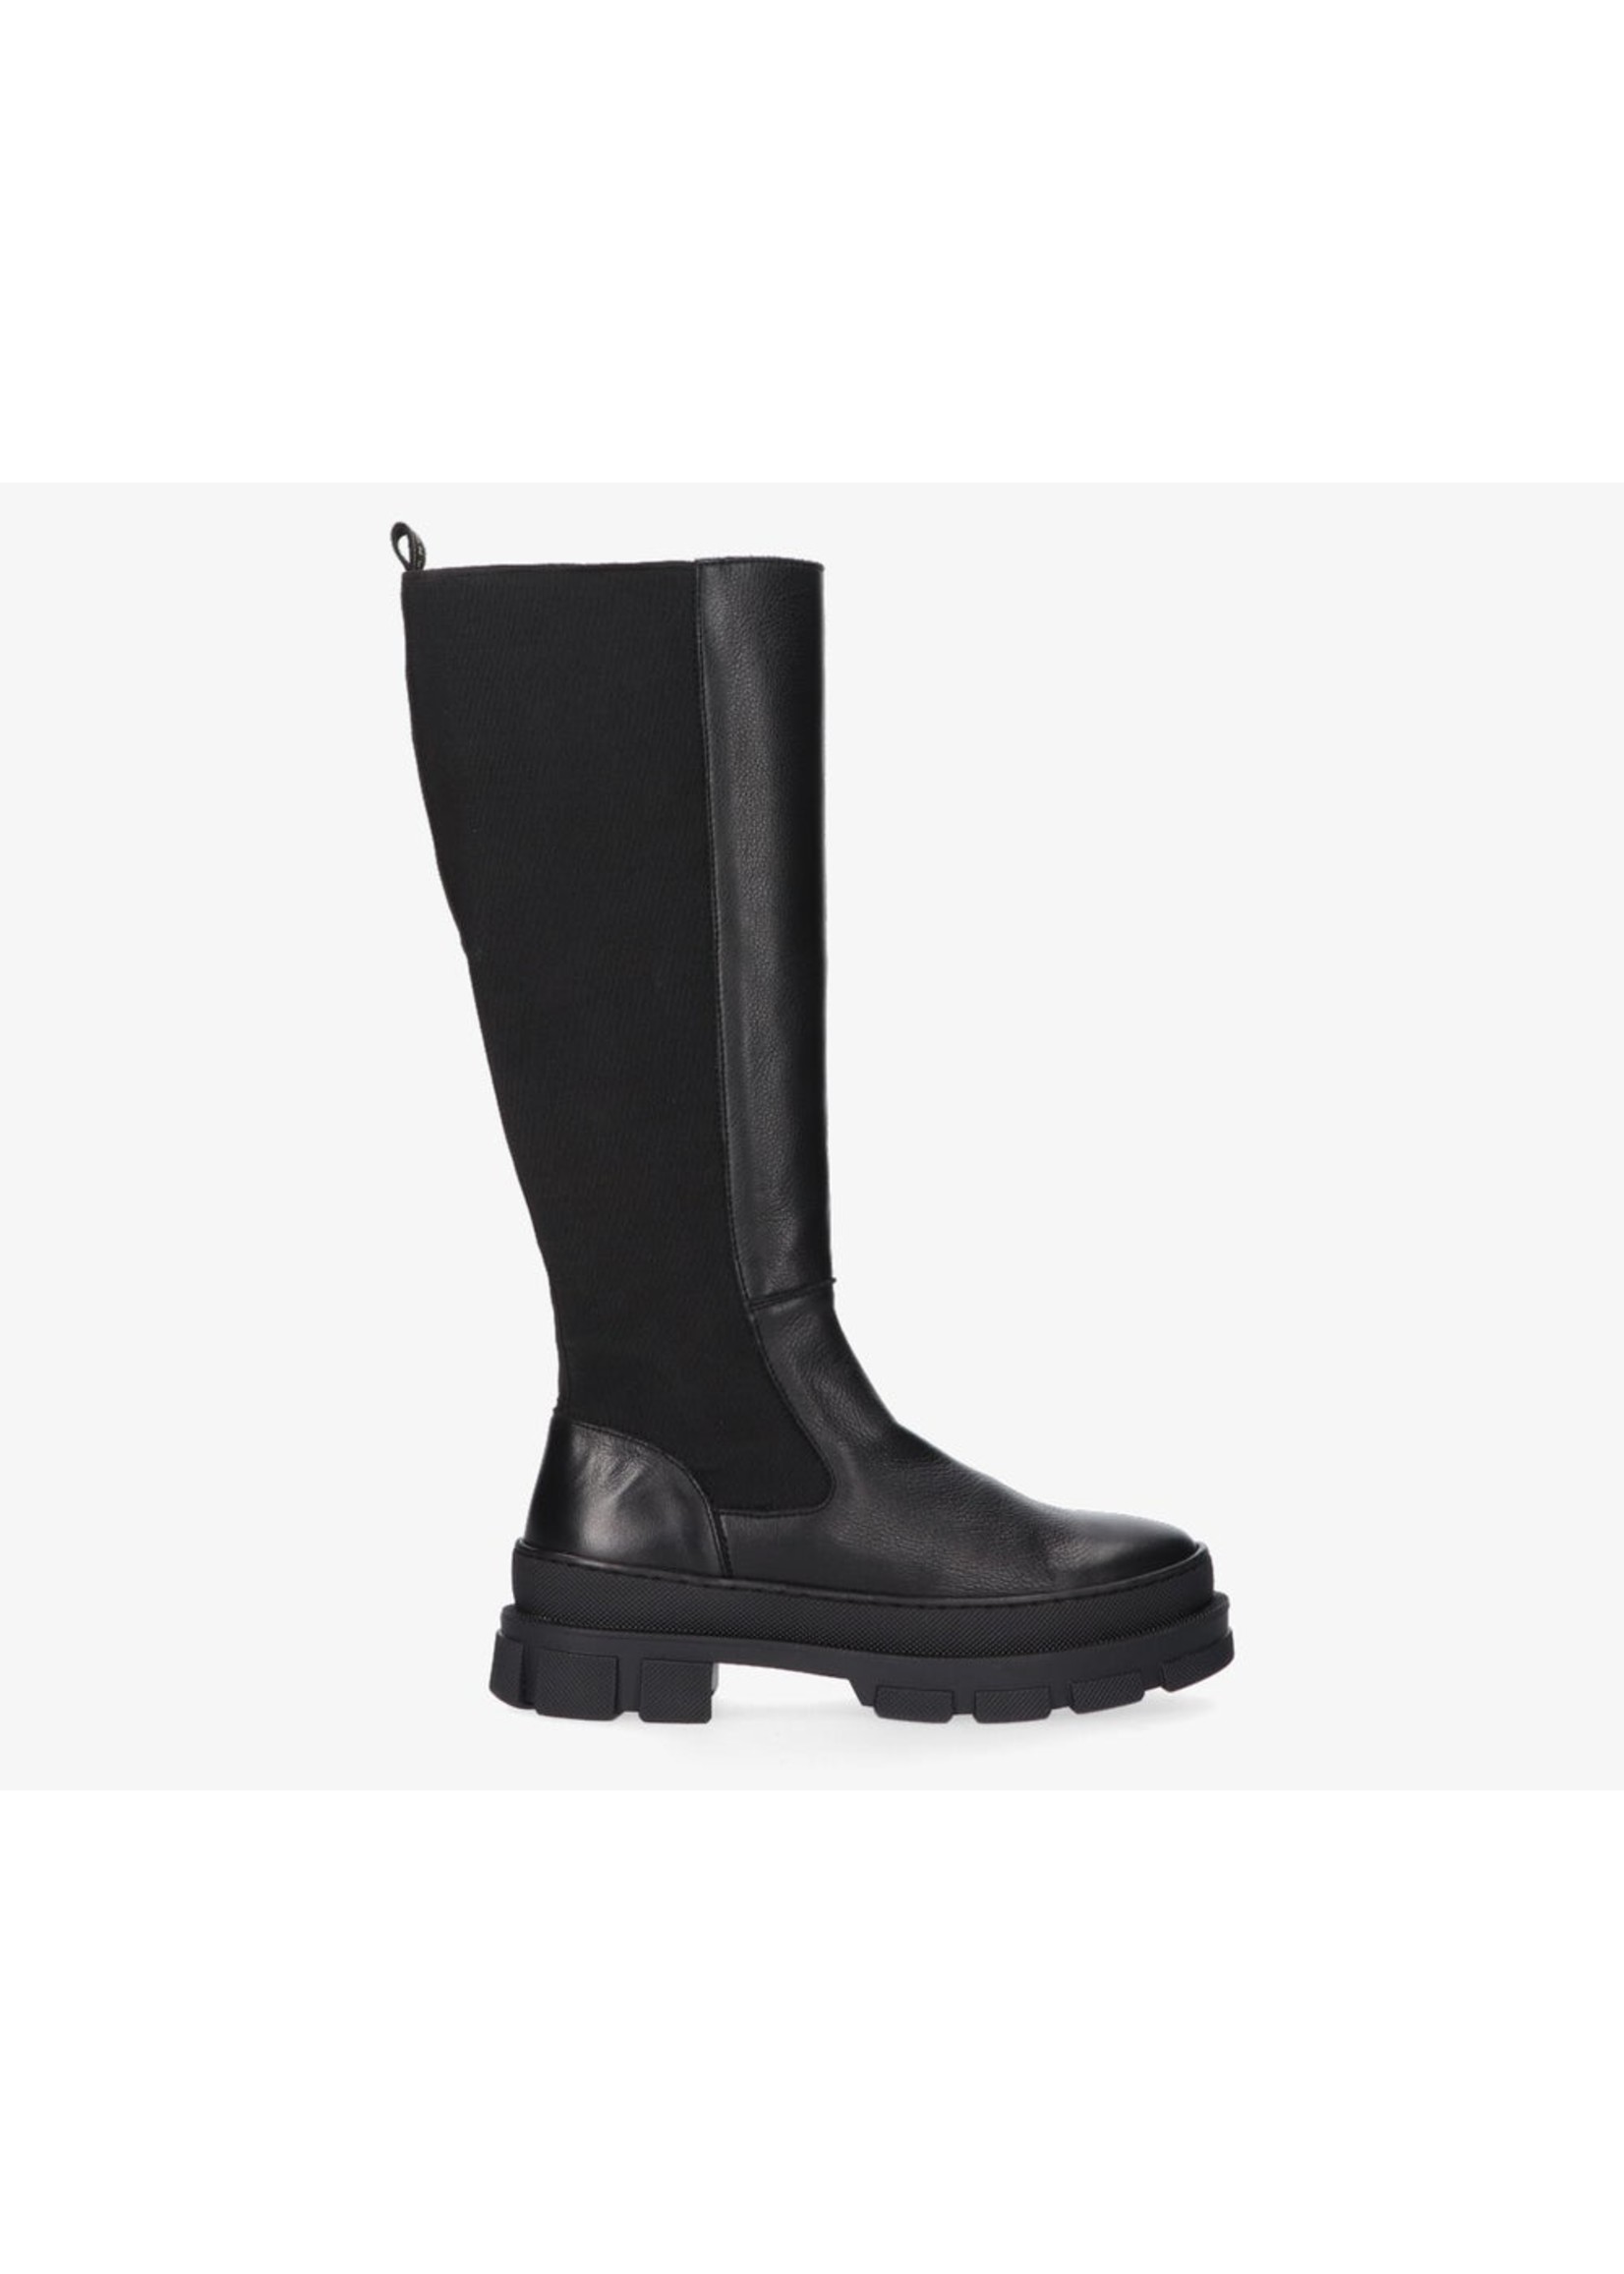 Tango Romy welt new 4-a black leather elastic boot